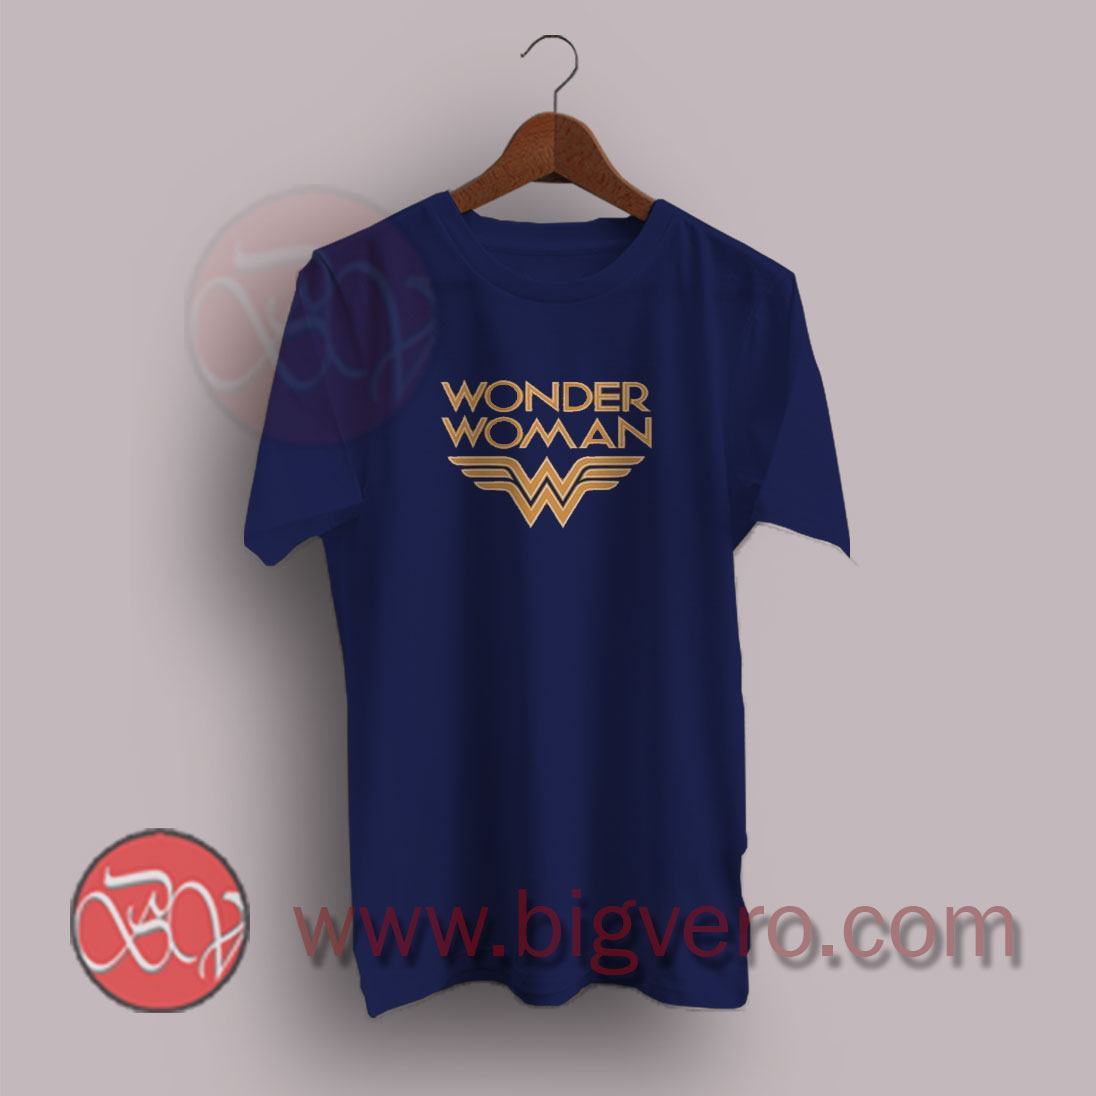 Check now! Wonder Woman design Blue Logo T-Shirt BigVero by